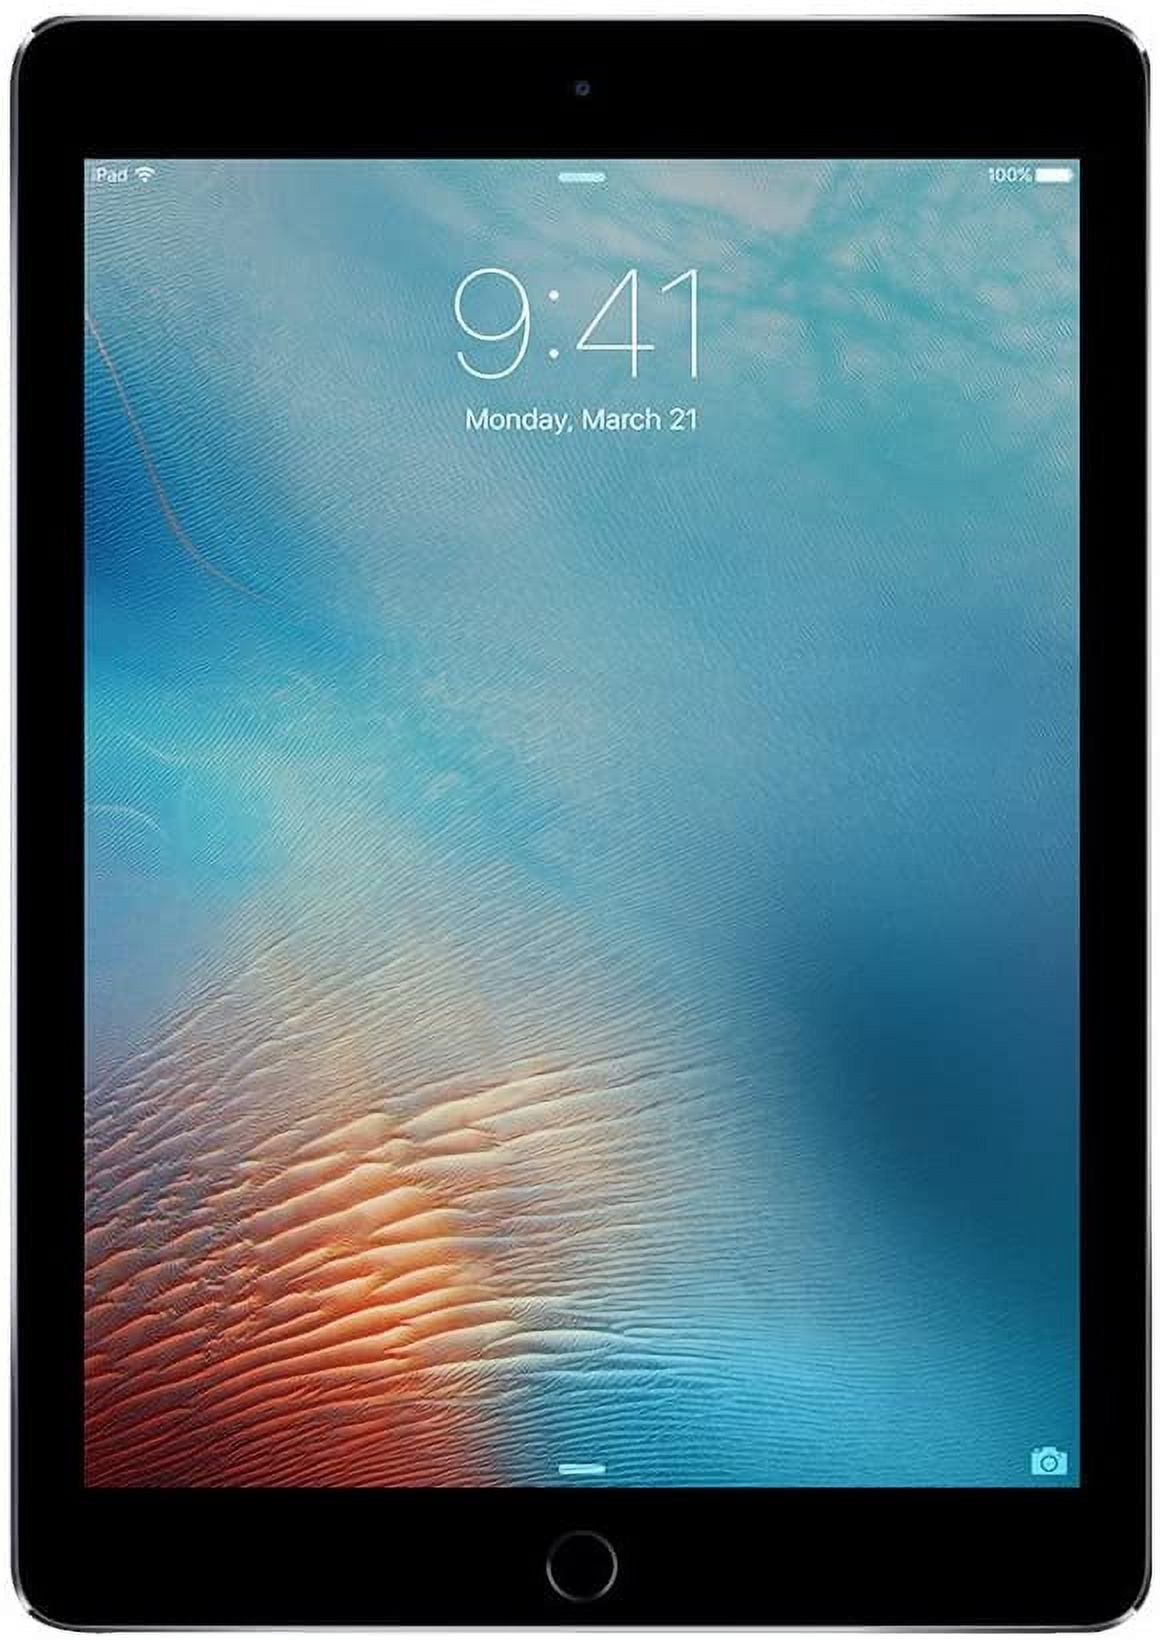 Apple iPad Pro 9.7 32GB Space Gray (WiFi) Used B+ - image 2 of 4